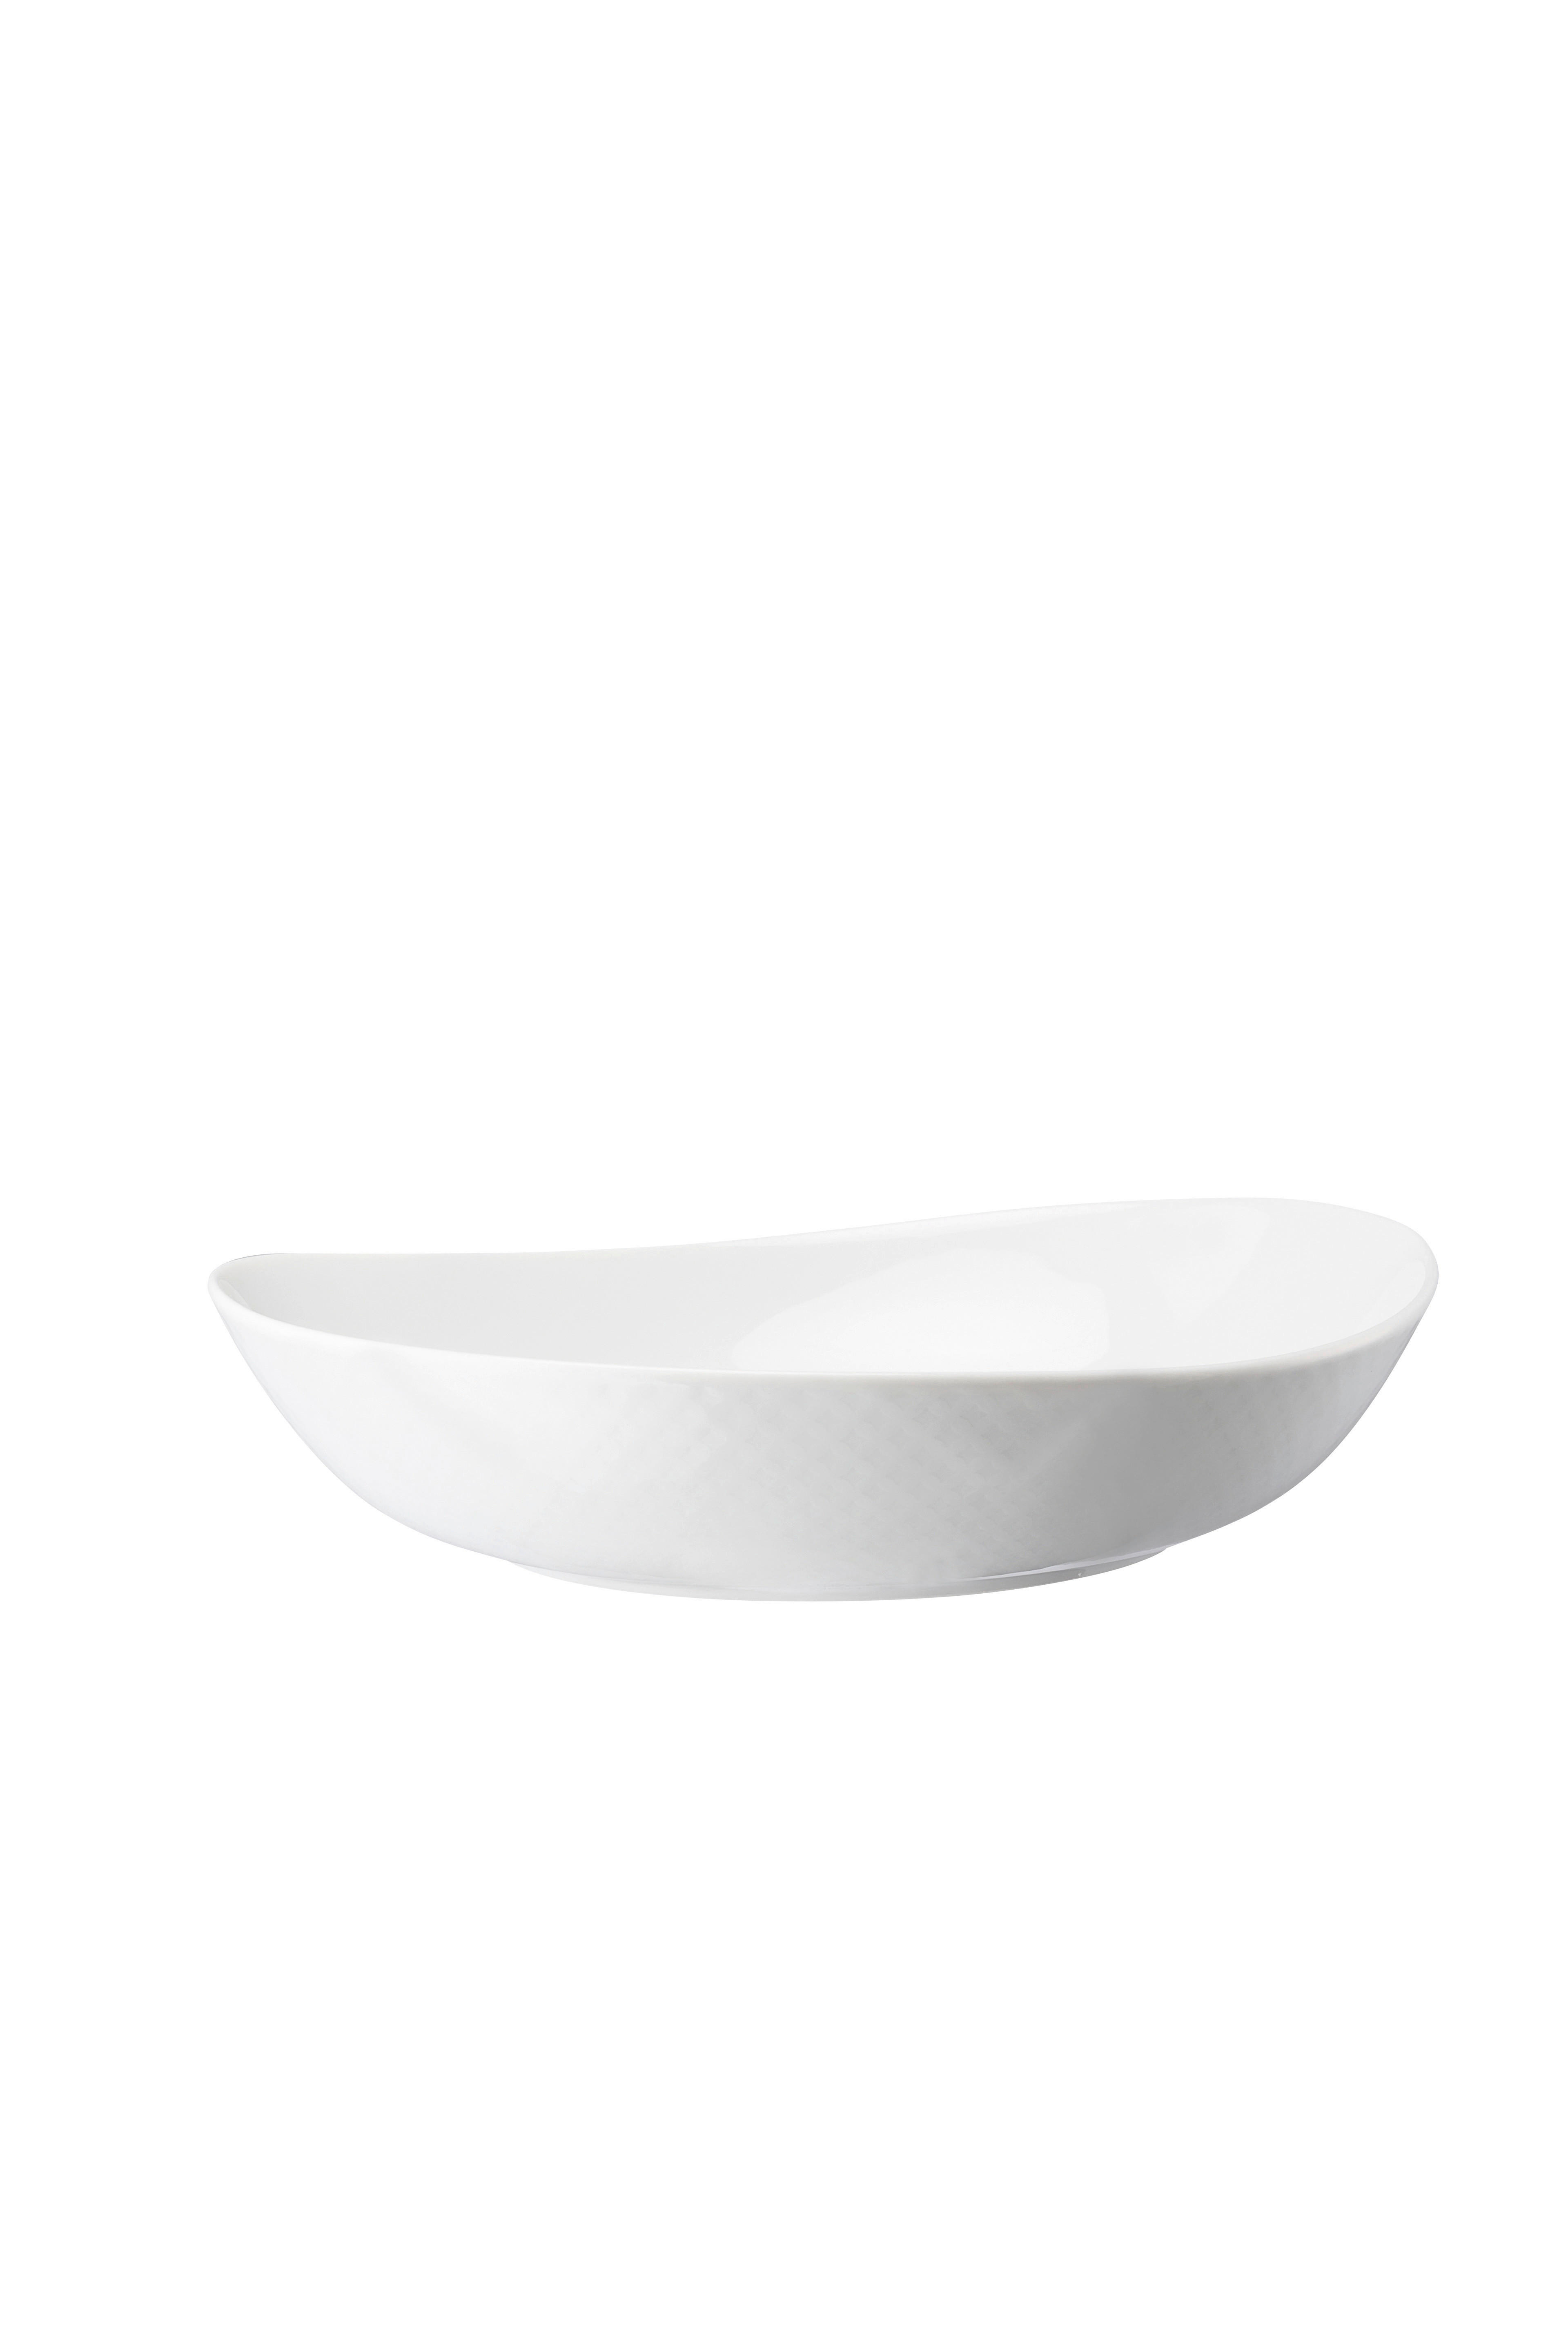 DUBOKI TANJIR  25 cm        - bela, Osnovno, keramika (25cm) - Rosenthal